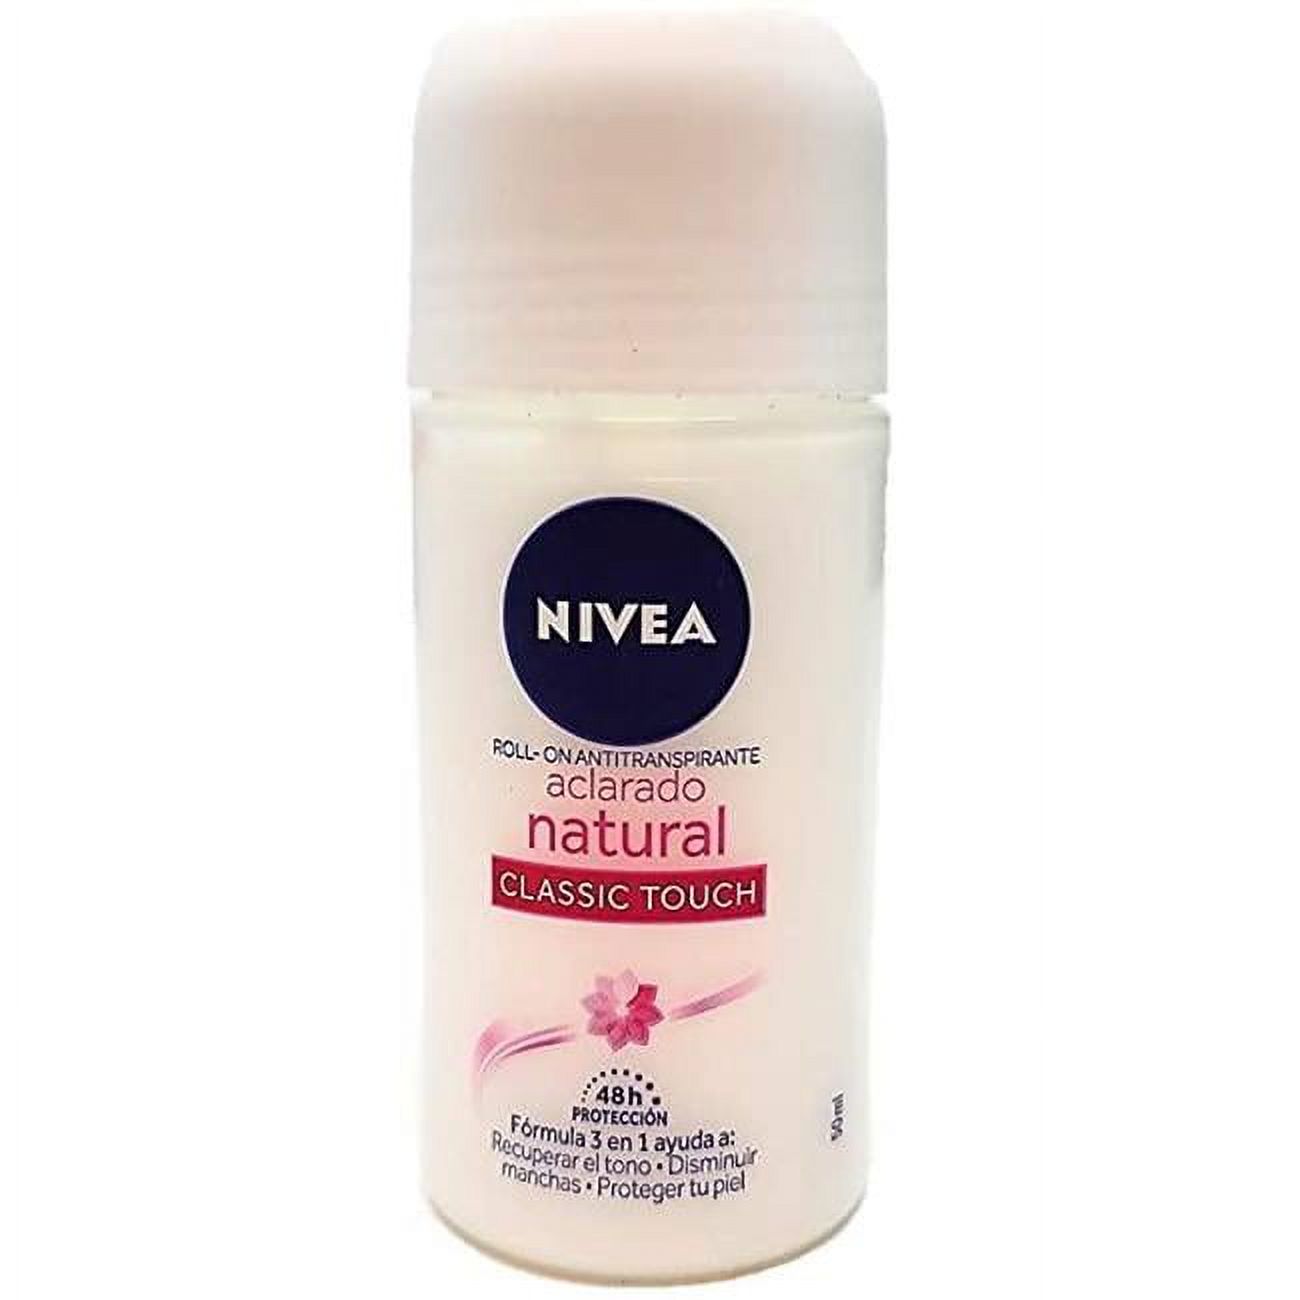 Nivea 4005808837472 50 ml Aclarado Natural Roll On Deodorant for Women - image 4 of 5